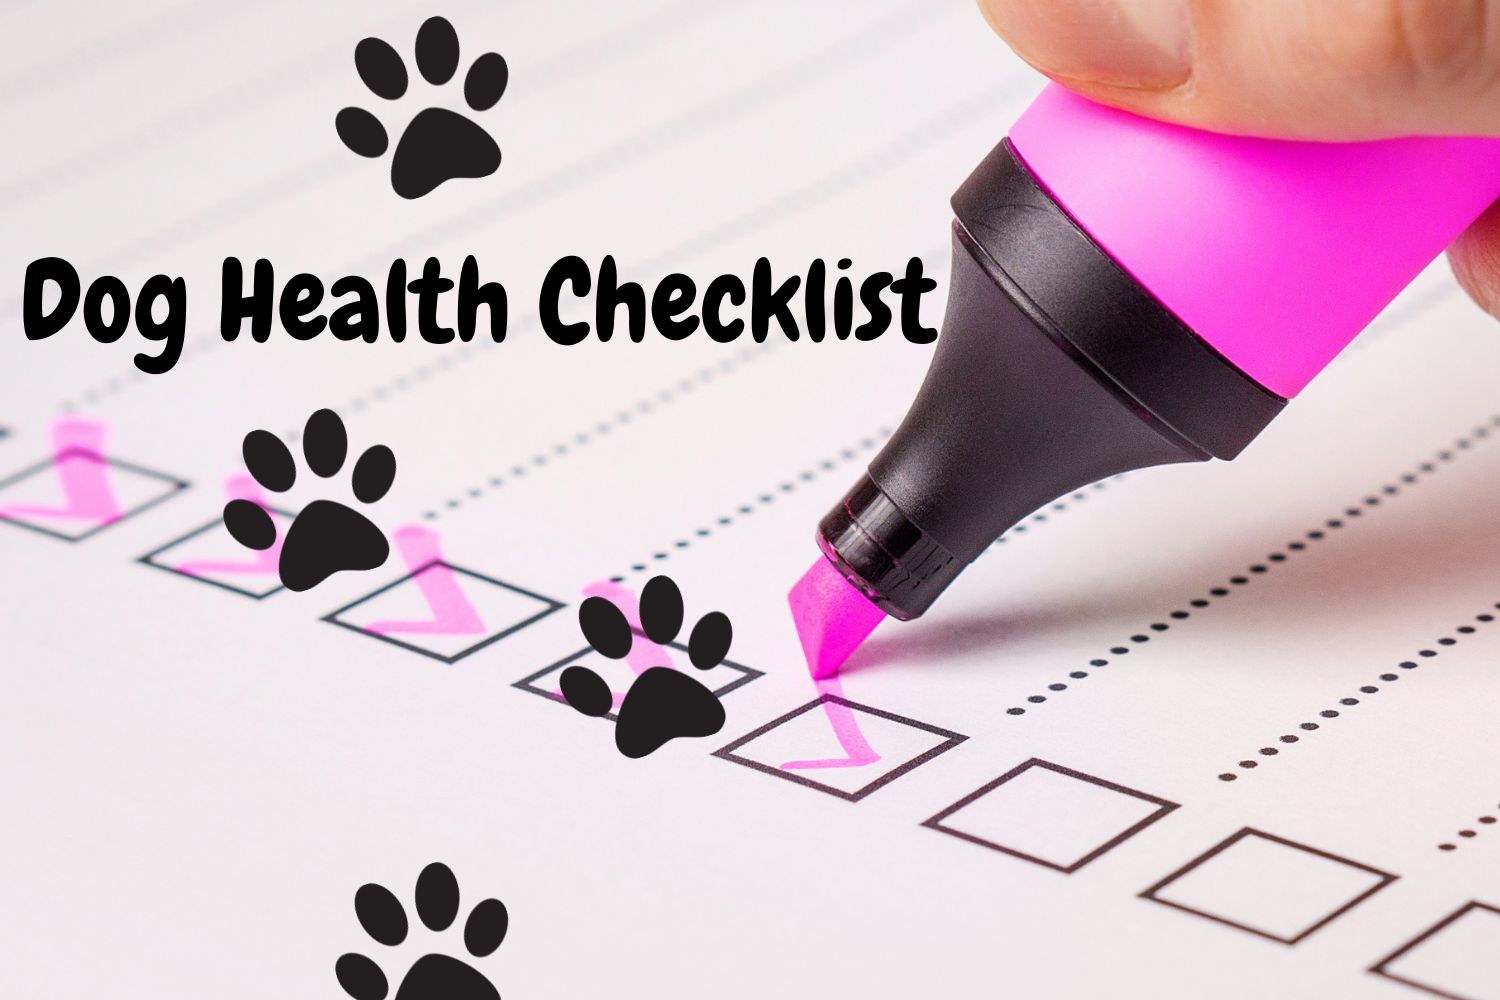 Dog health checklist